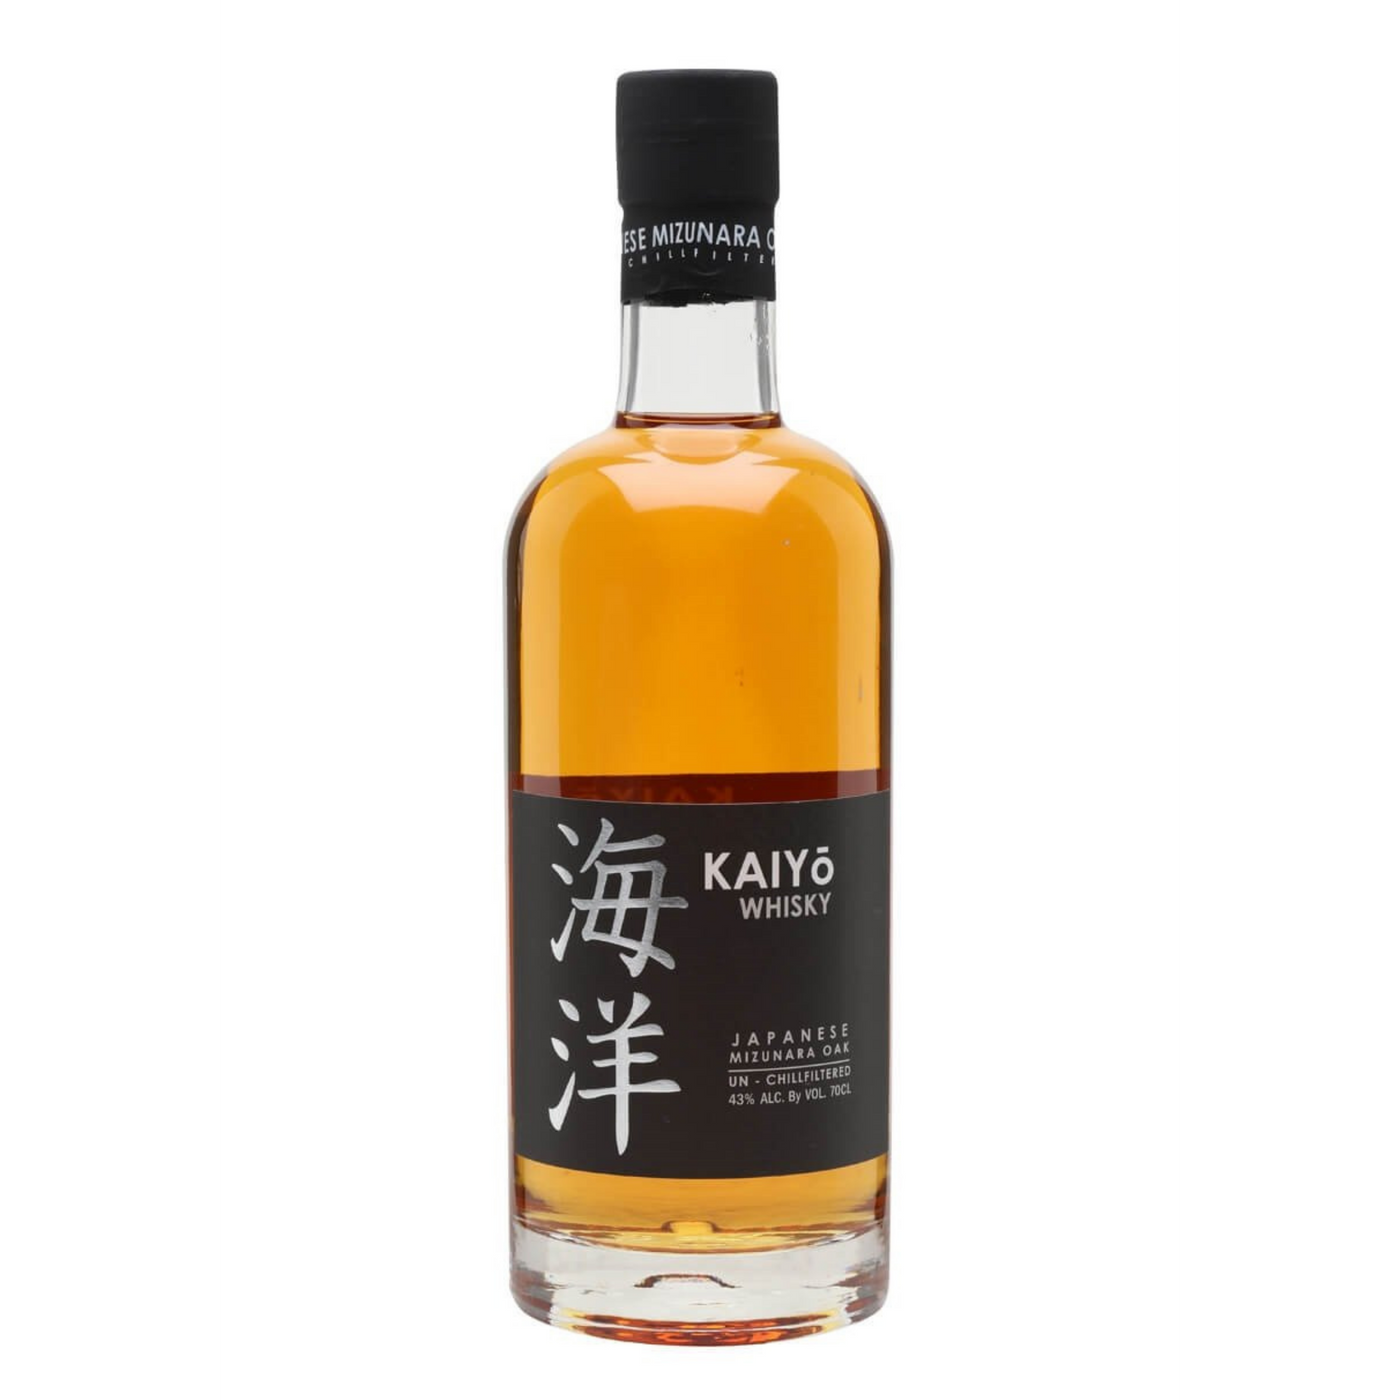 Kaiyo Japanese Mizunara Oak Whisky 43% 70cl